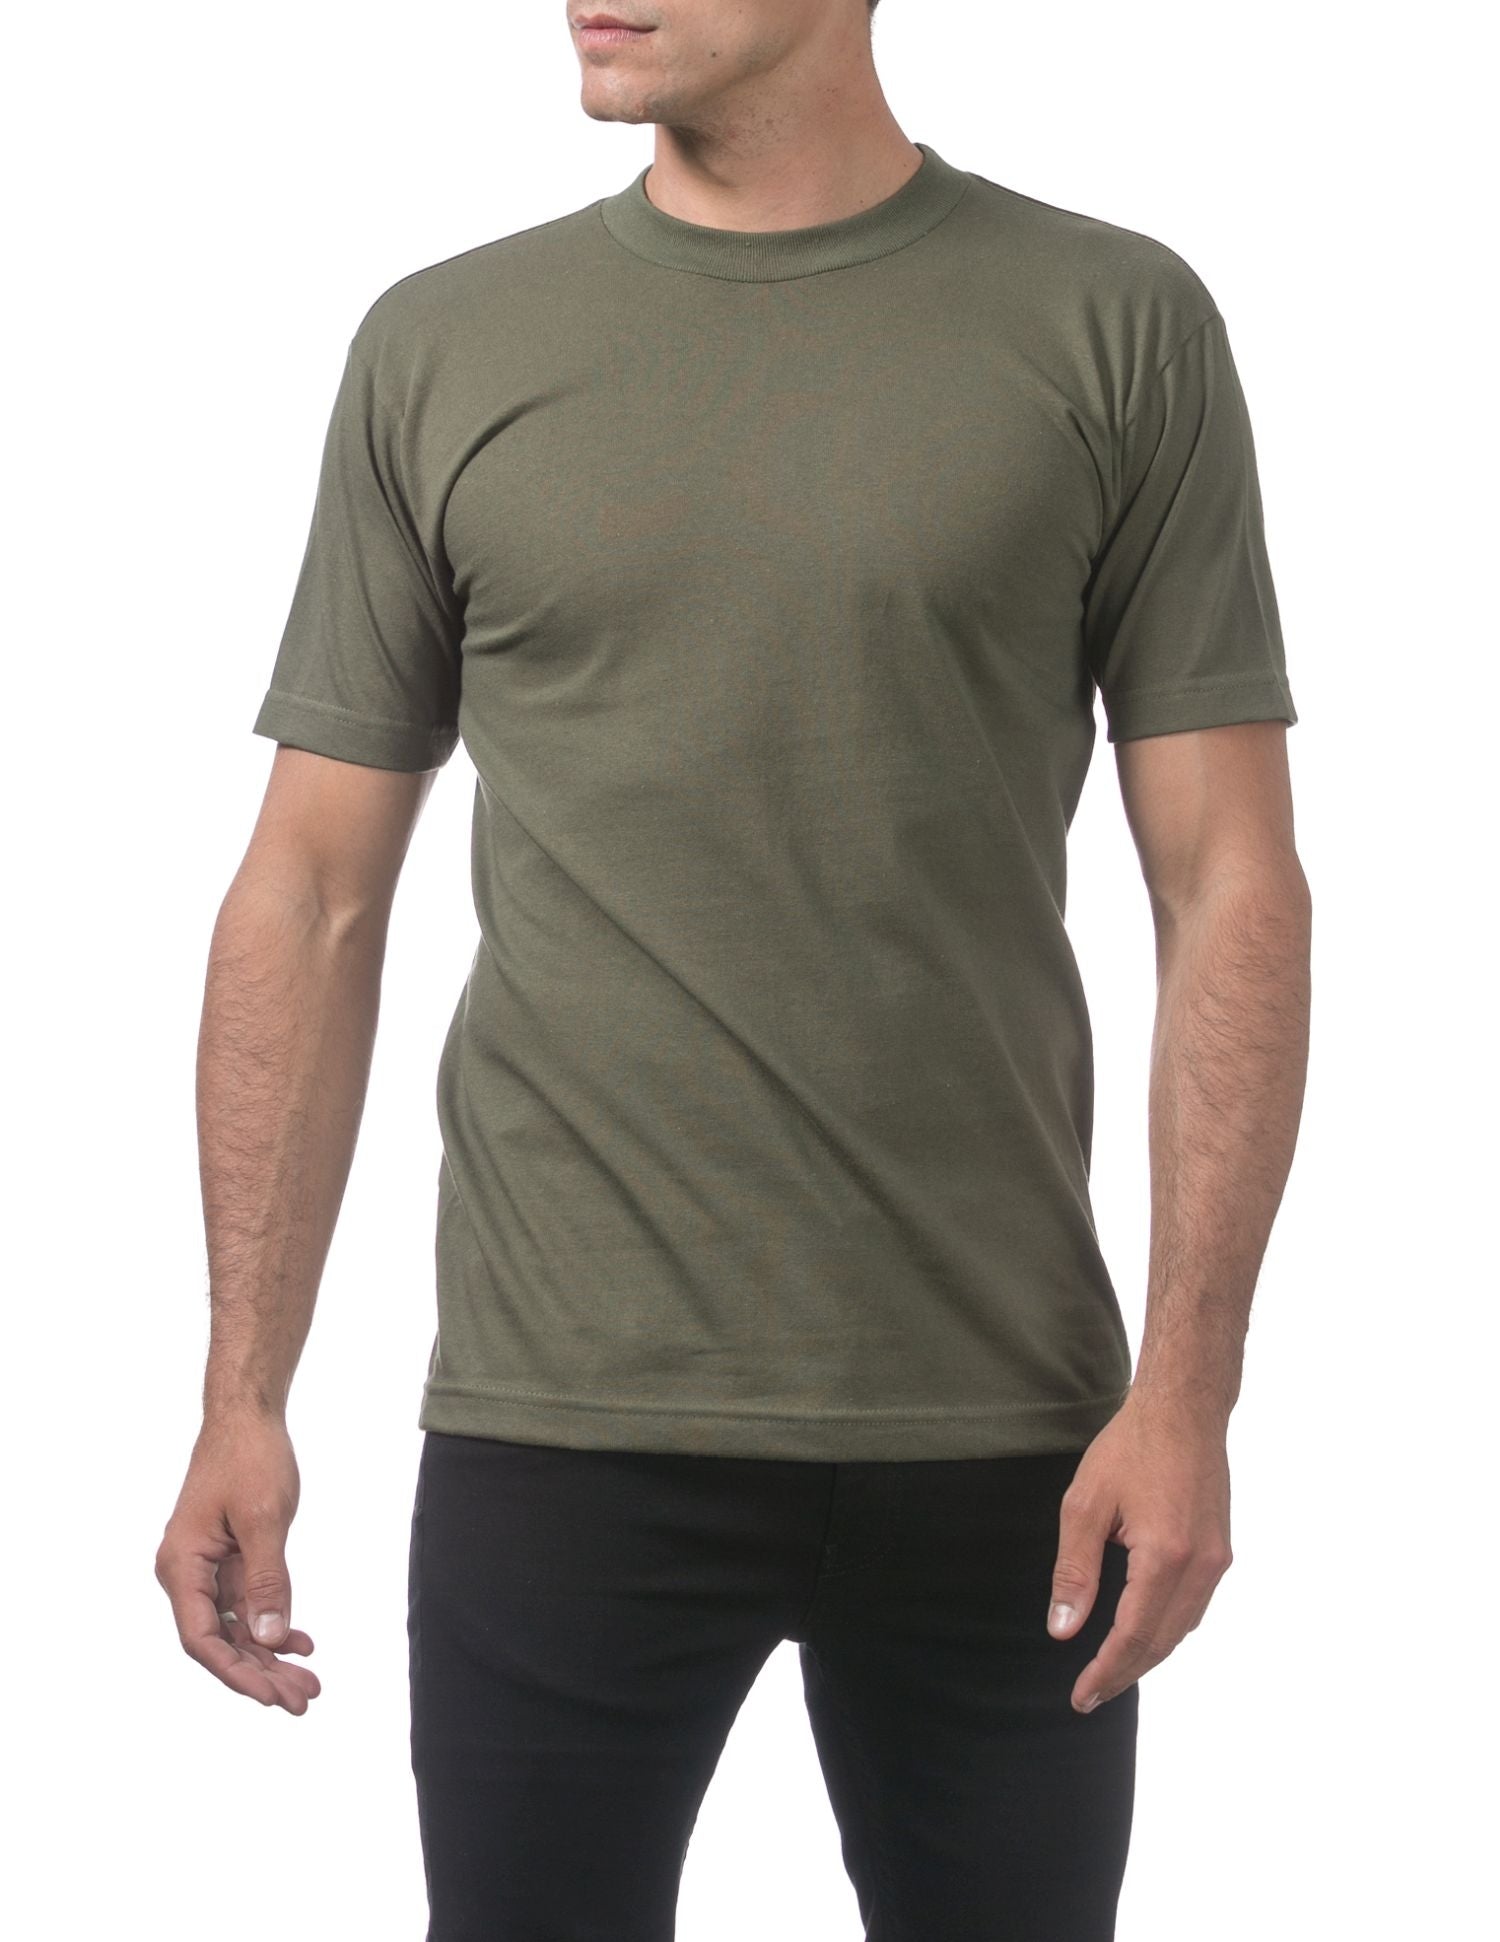 Pro Club Men's Comfort Cotton Short Sleeve T-Shirt - Olive Green - Medium - Pro-Distributing